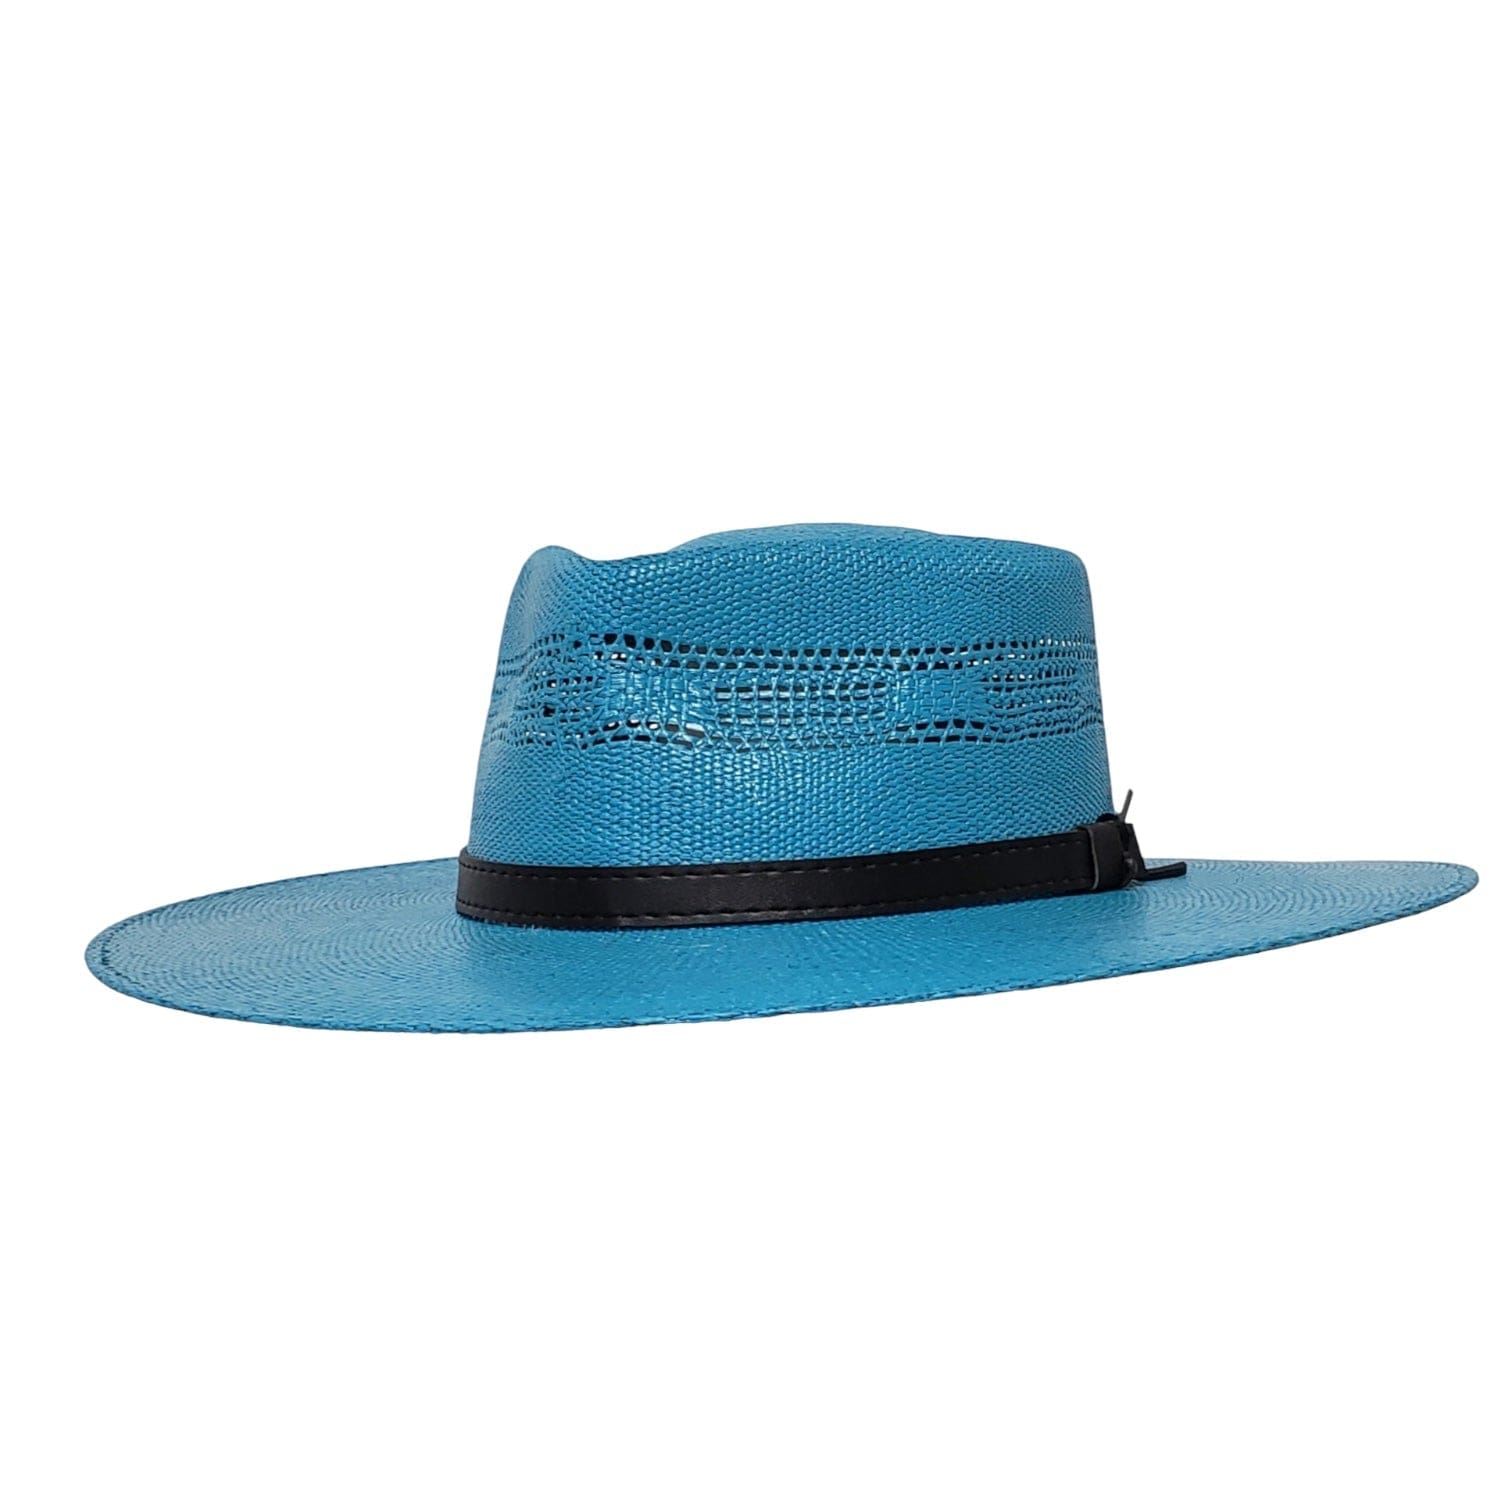 Gone Country Hats Women's Hats Medium  fits 7-1/8 to 7-1/4 Lolita Turquoise - Straw Bangora